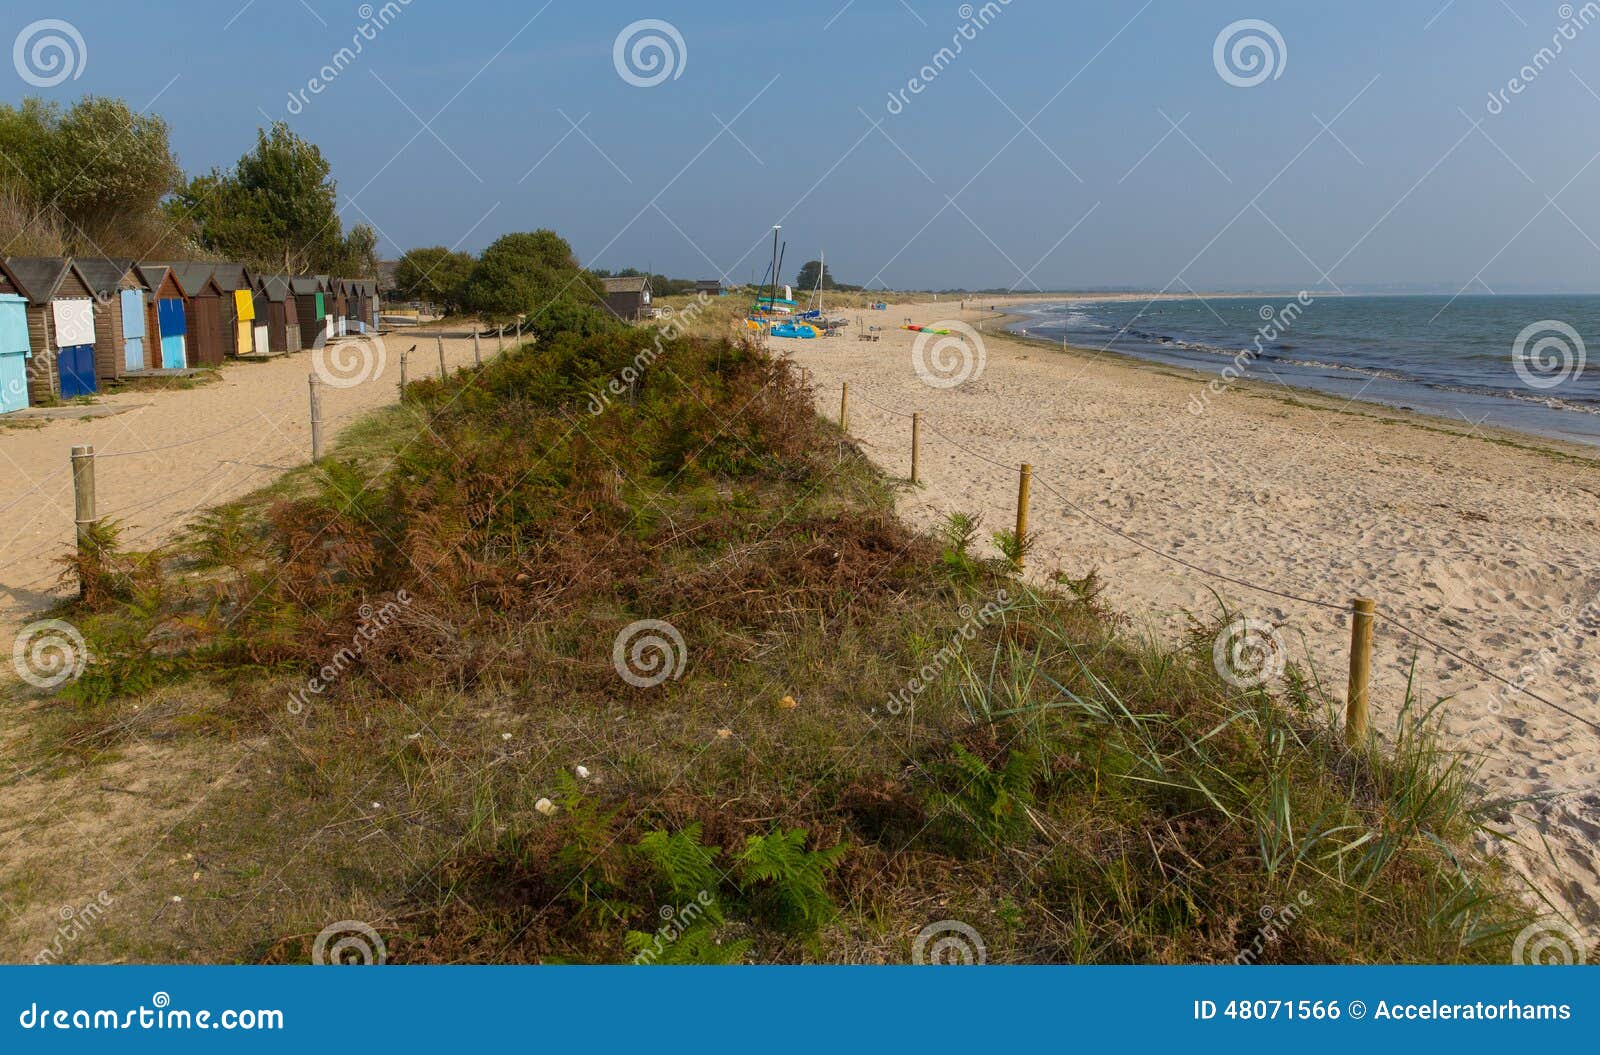 studland knoll beach dorset england uk with beach huts